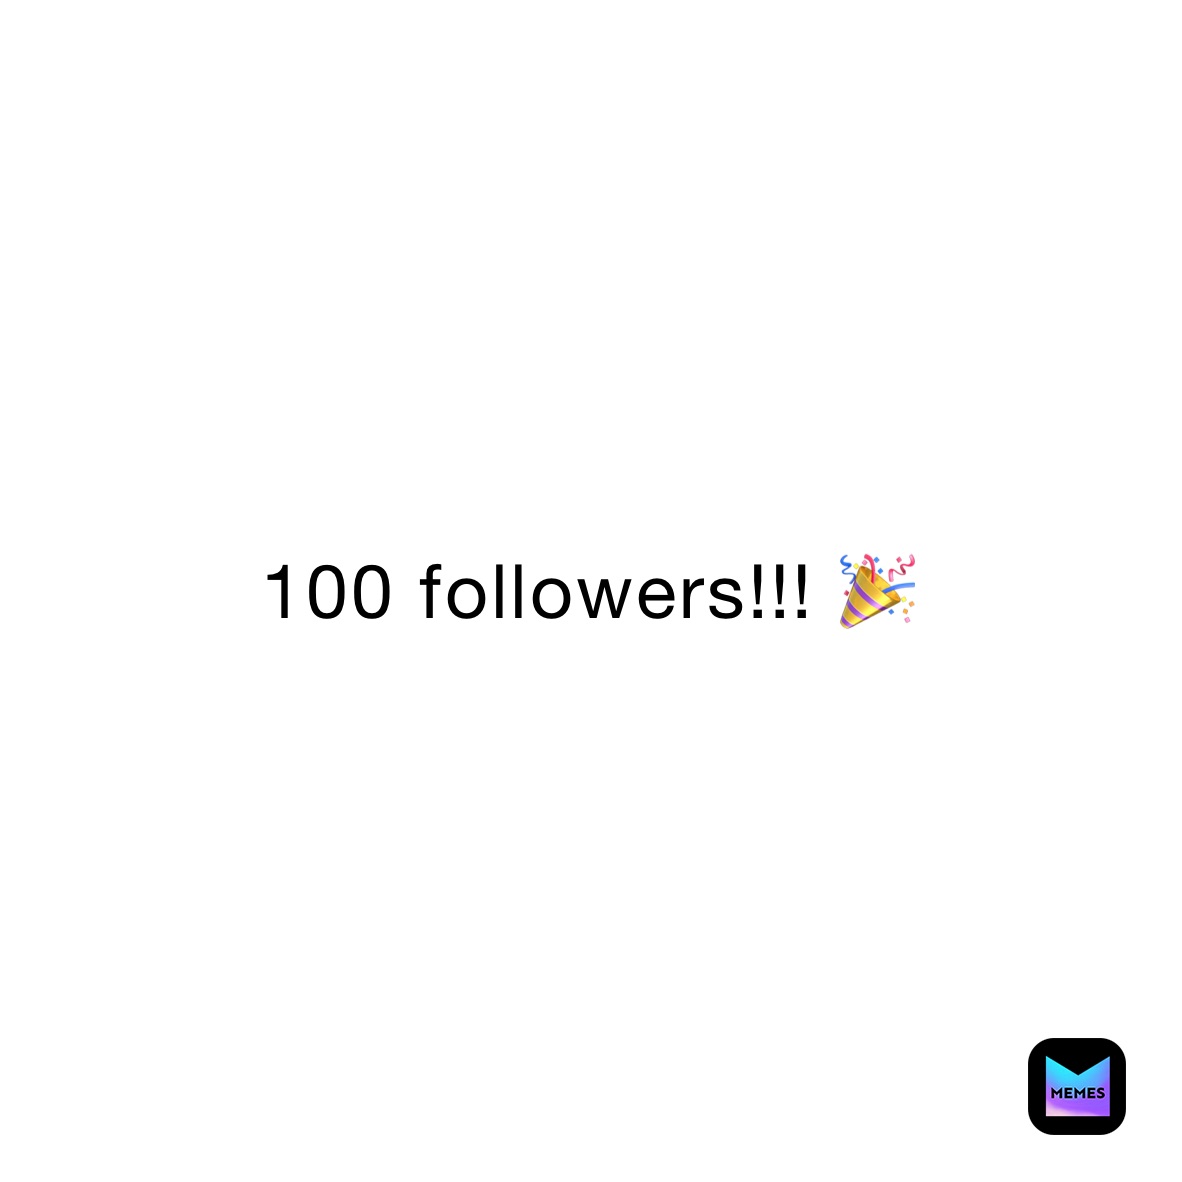 100 followers!!! 🎉 